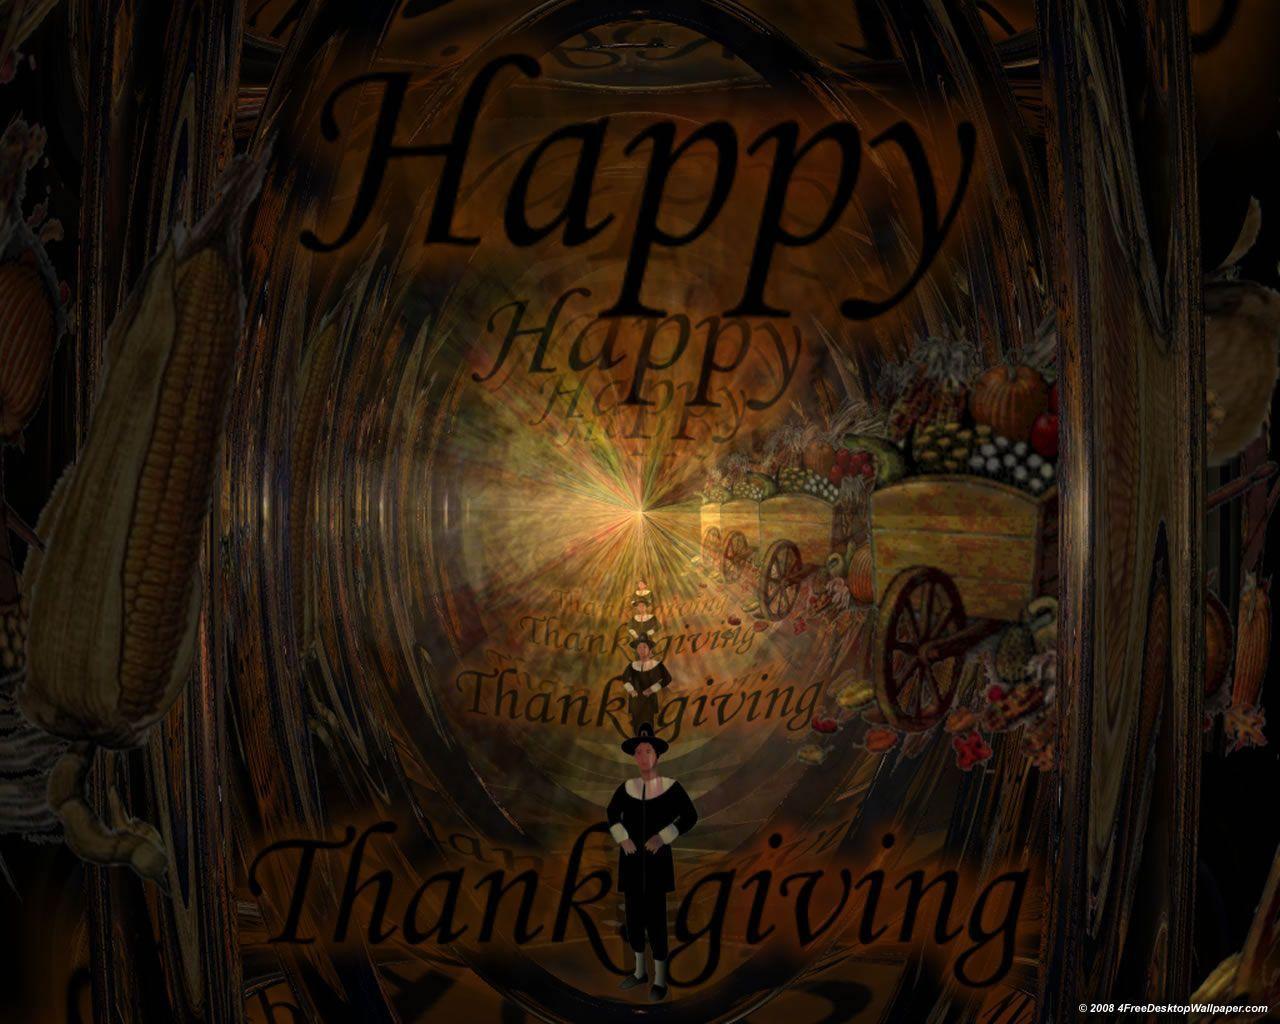 Thanksgiving Wallpaper Background